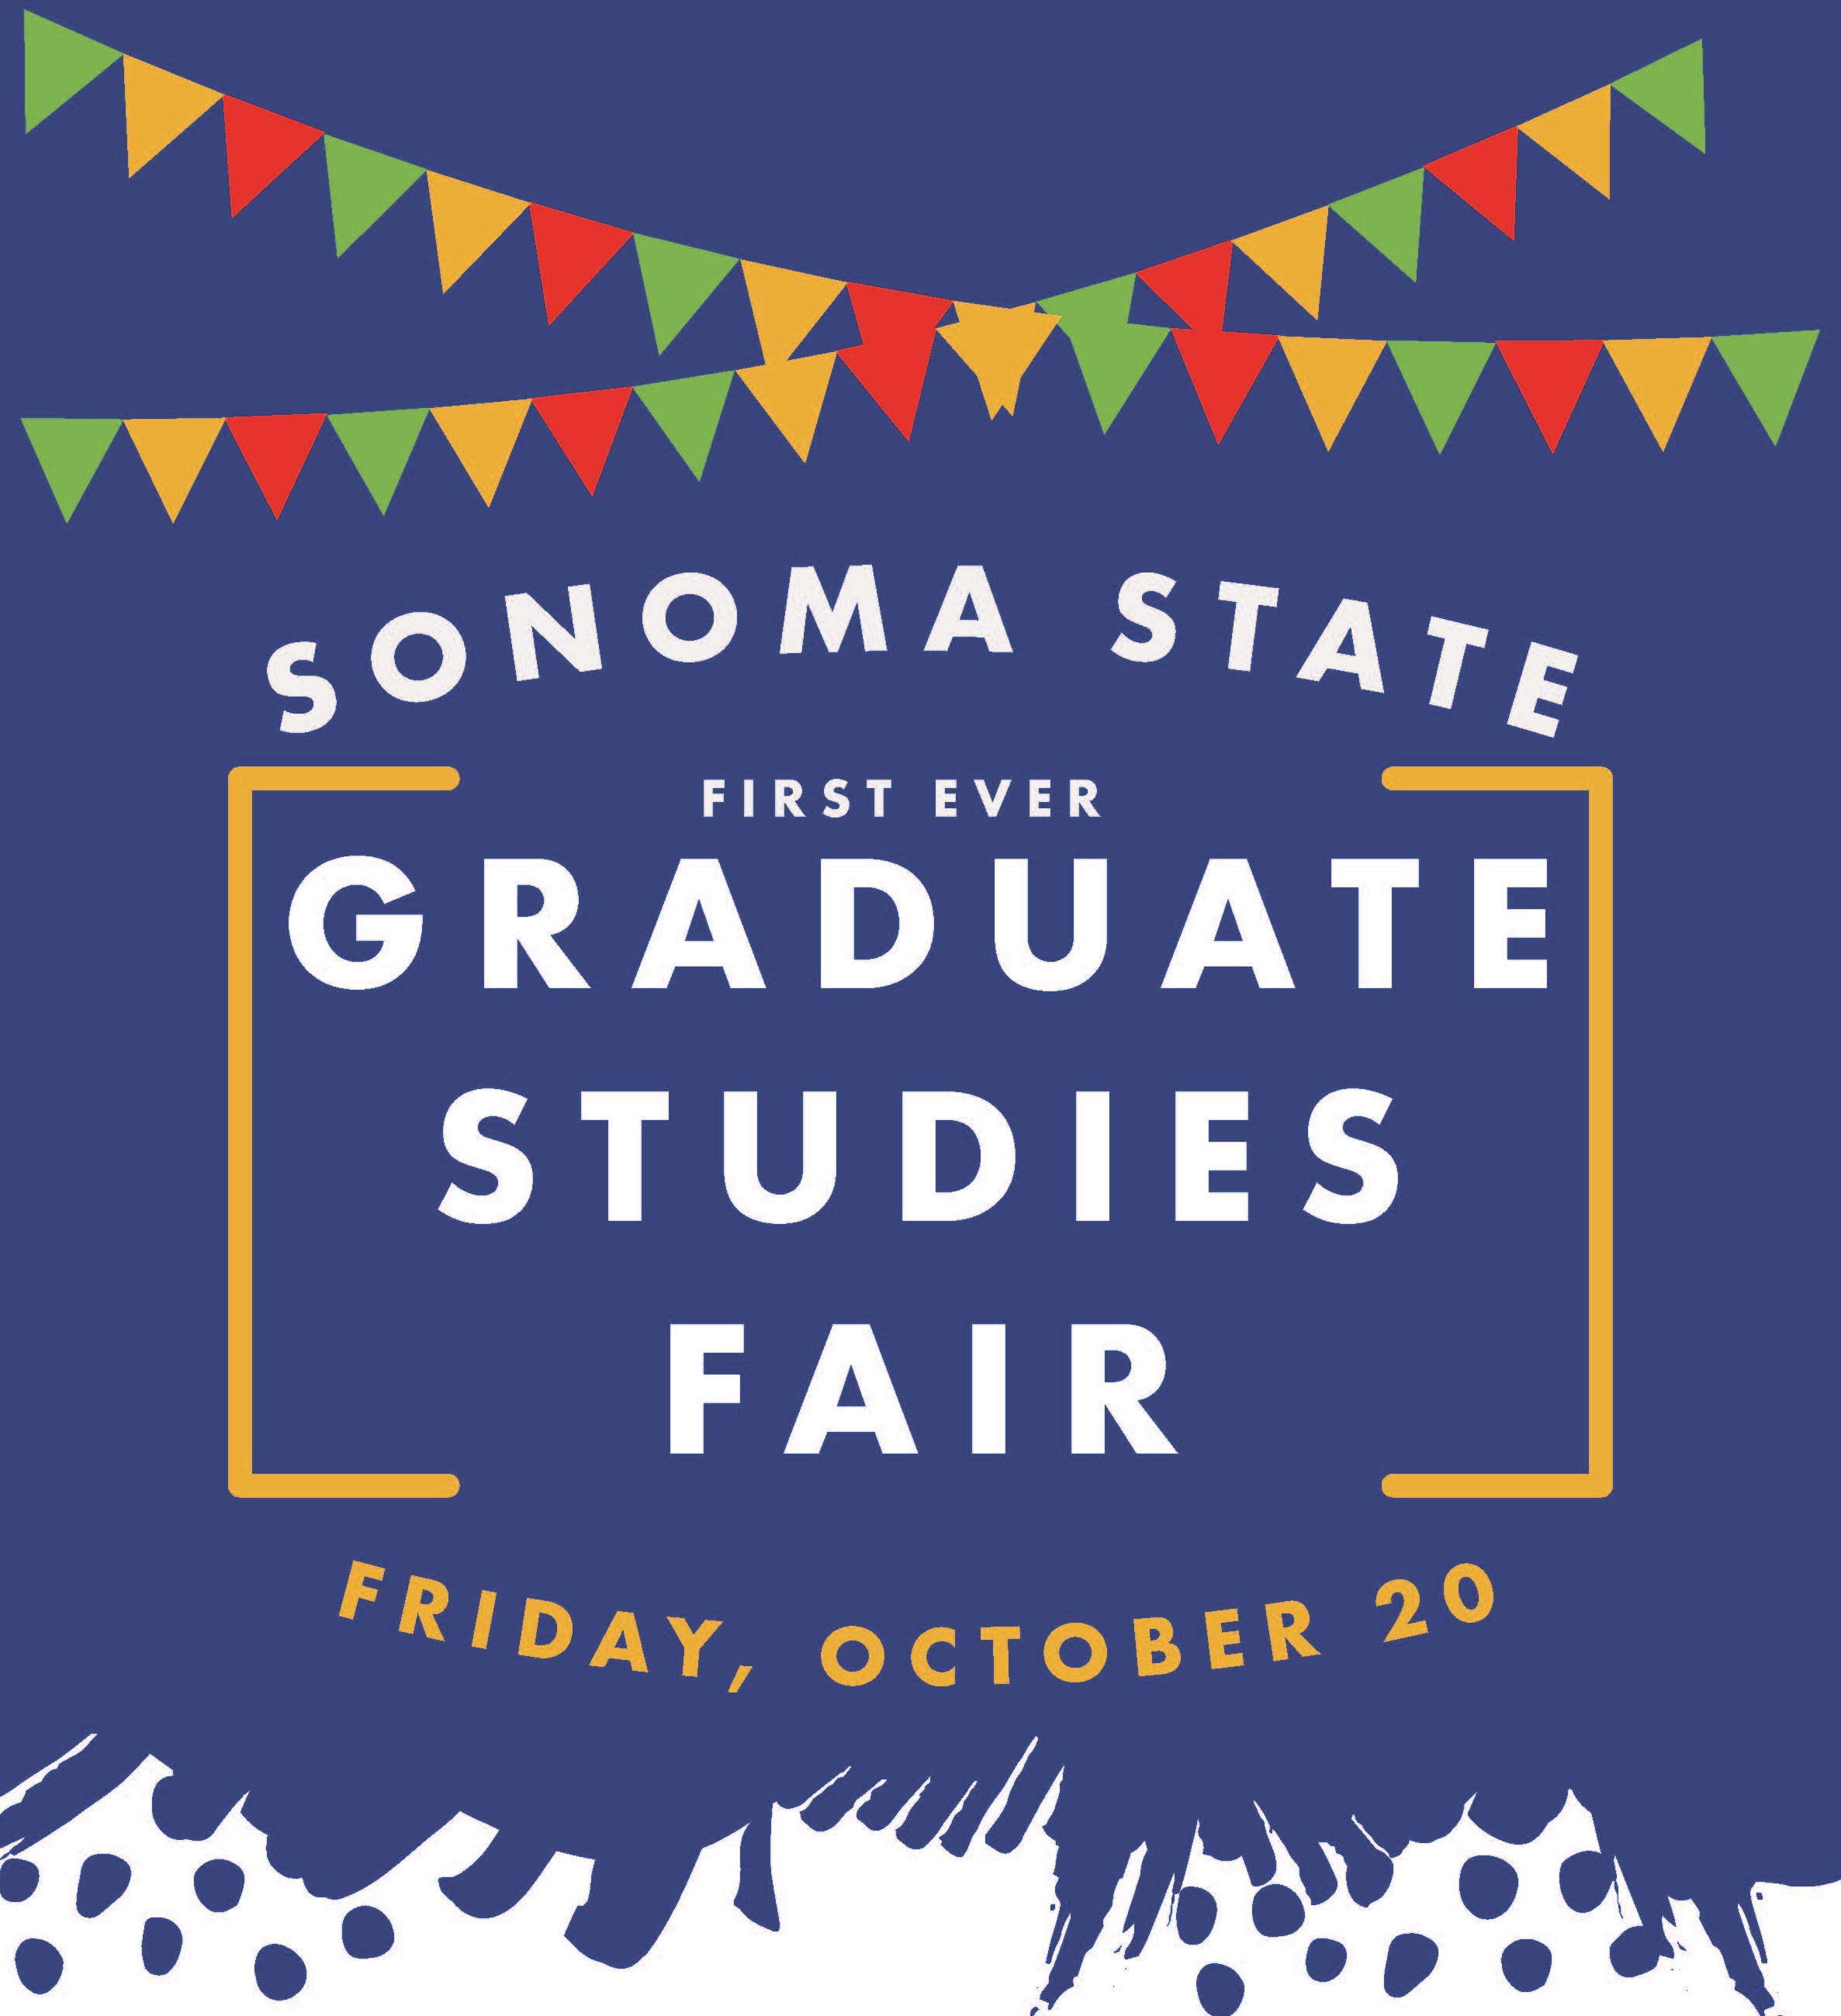 Sonoma State first ever Graduate Studies Fair